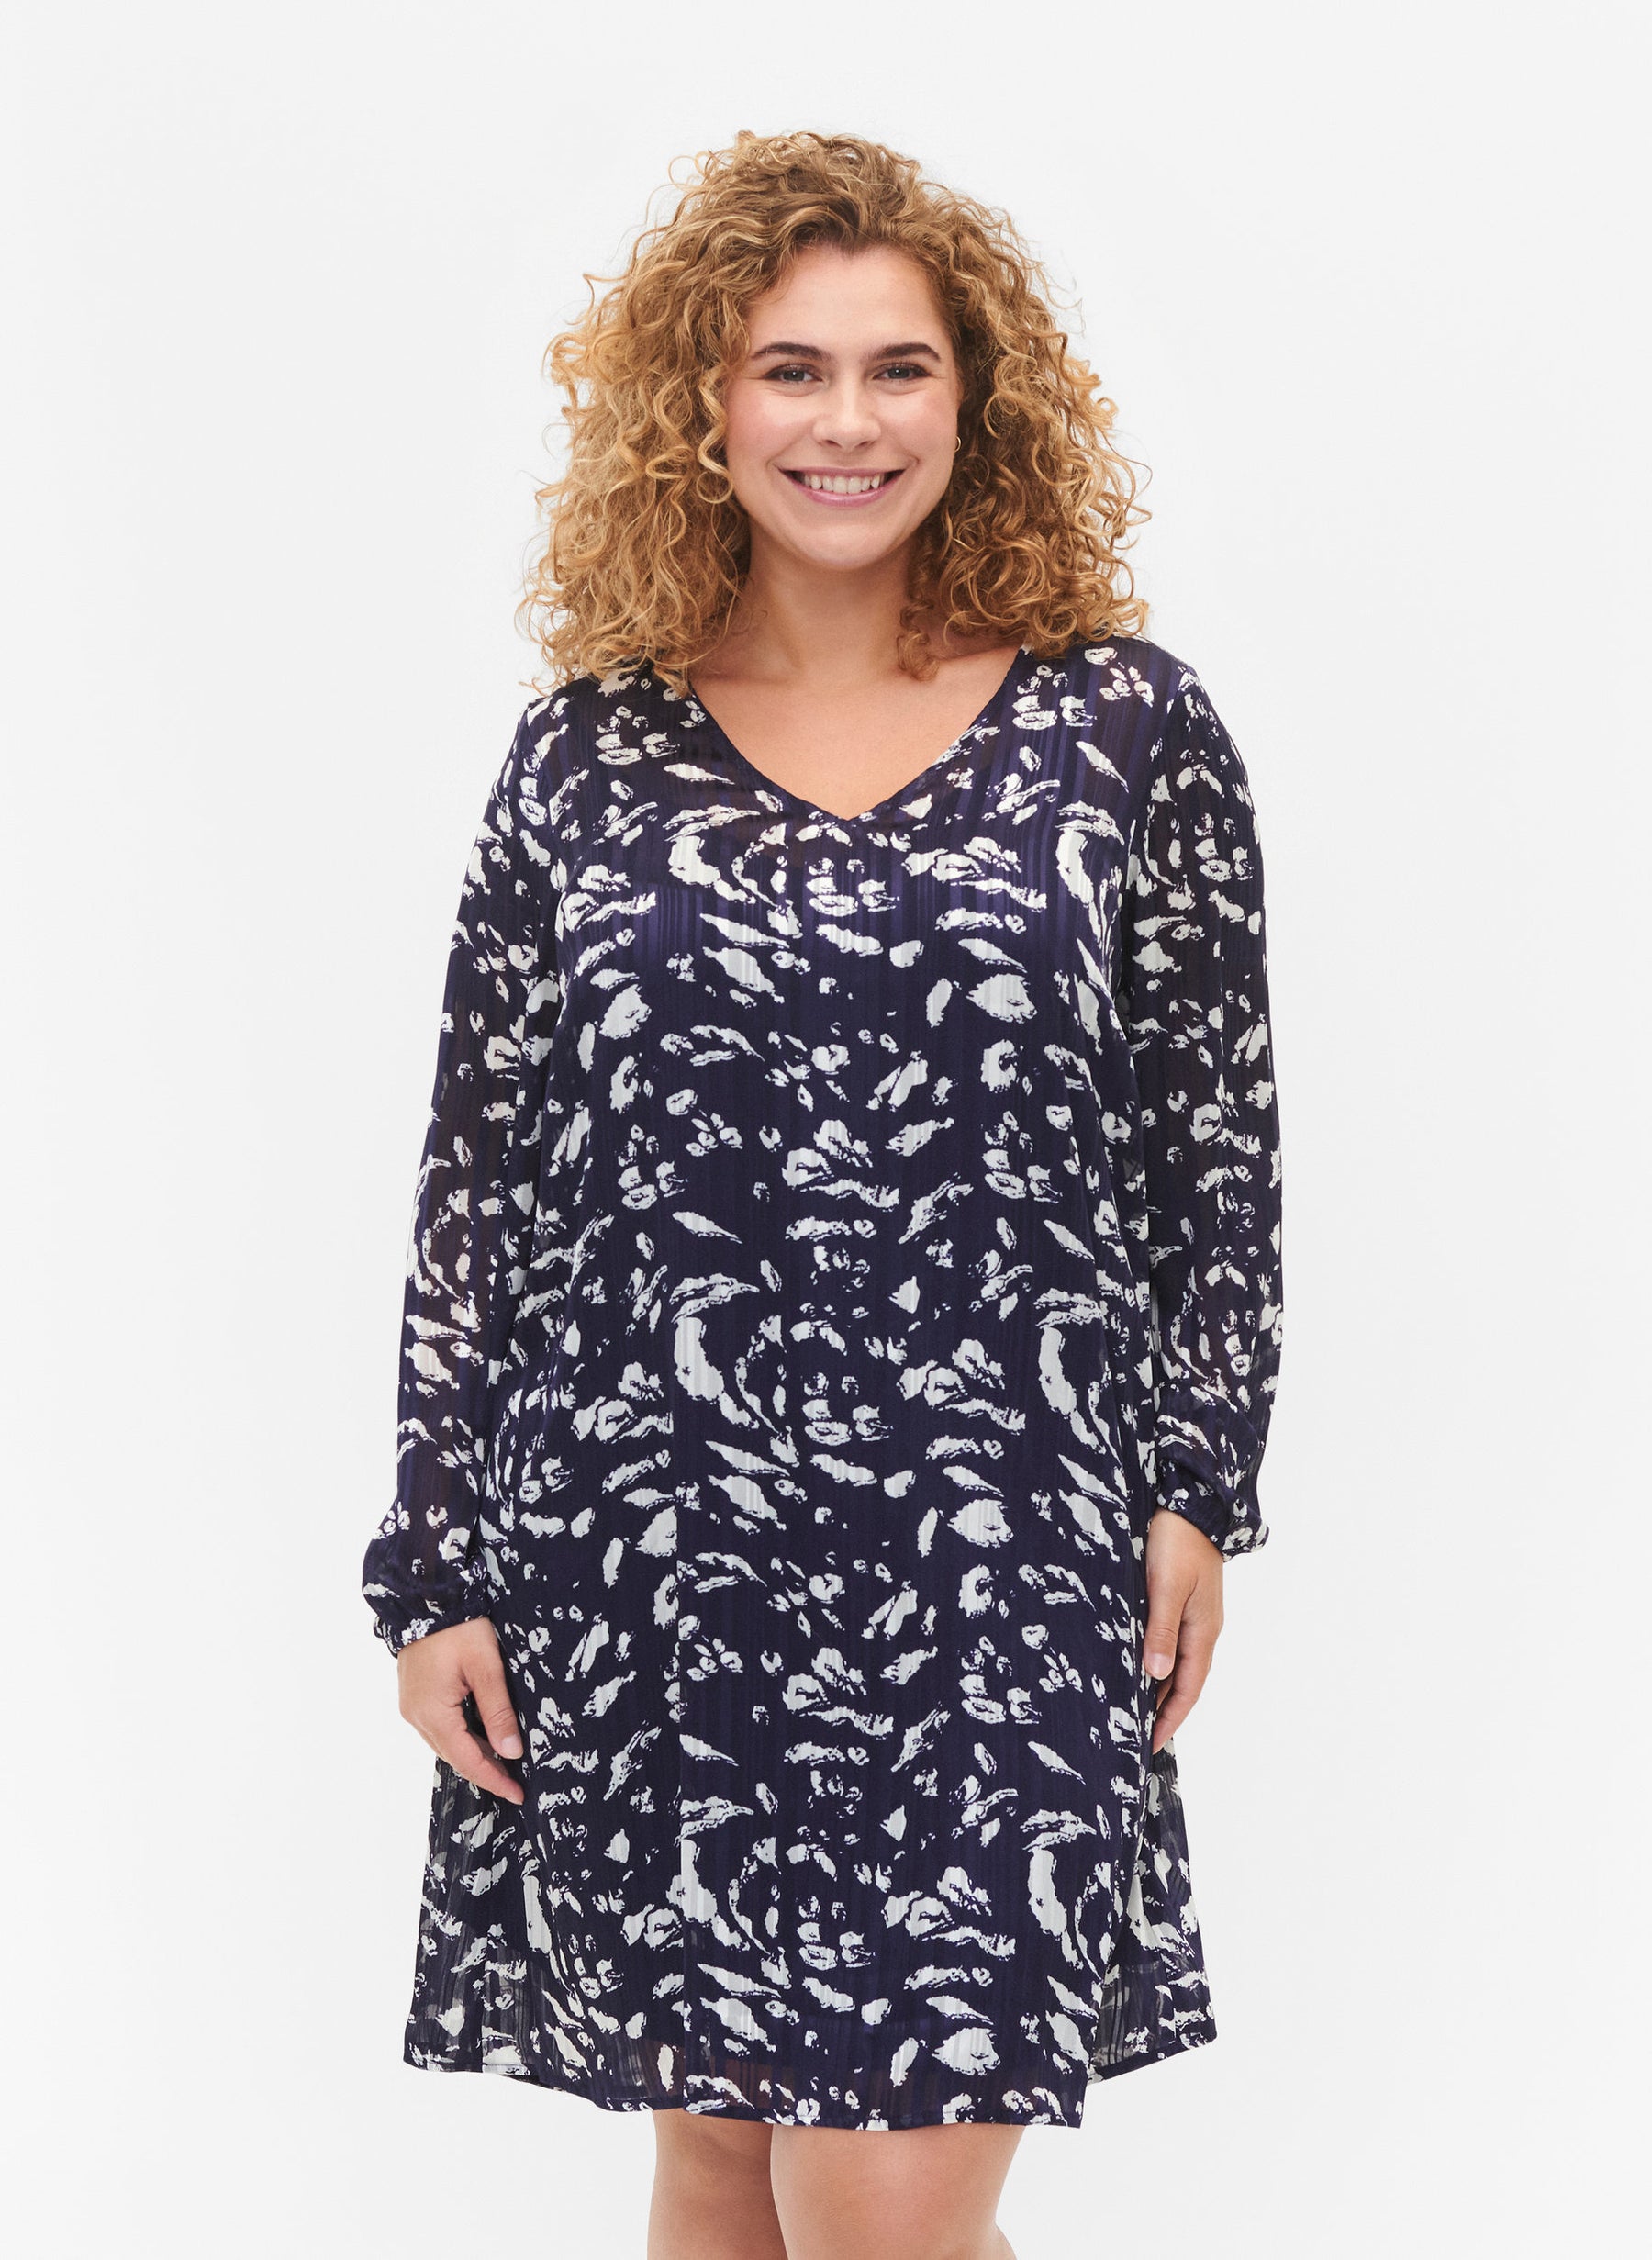 Zizzi Lucy Dress in Leaf Print, Plus Size Clothing